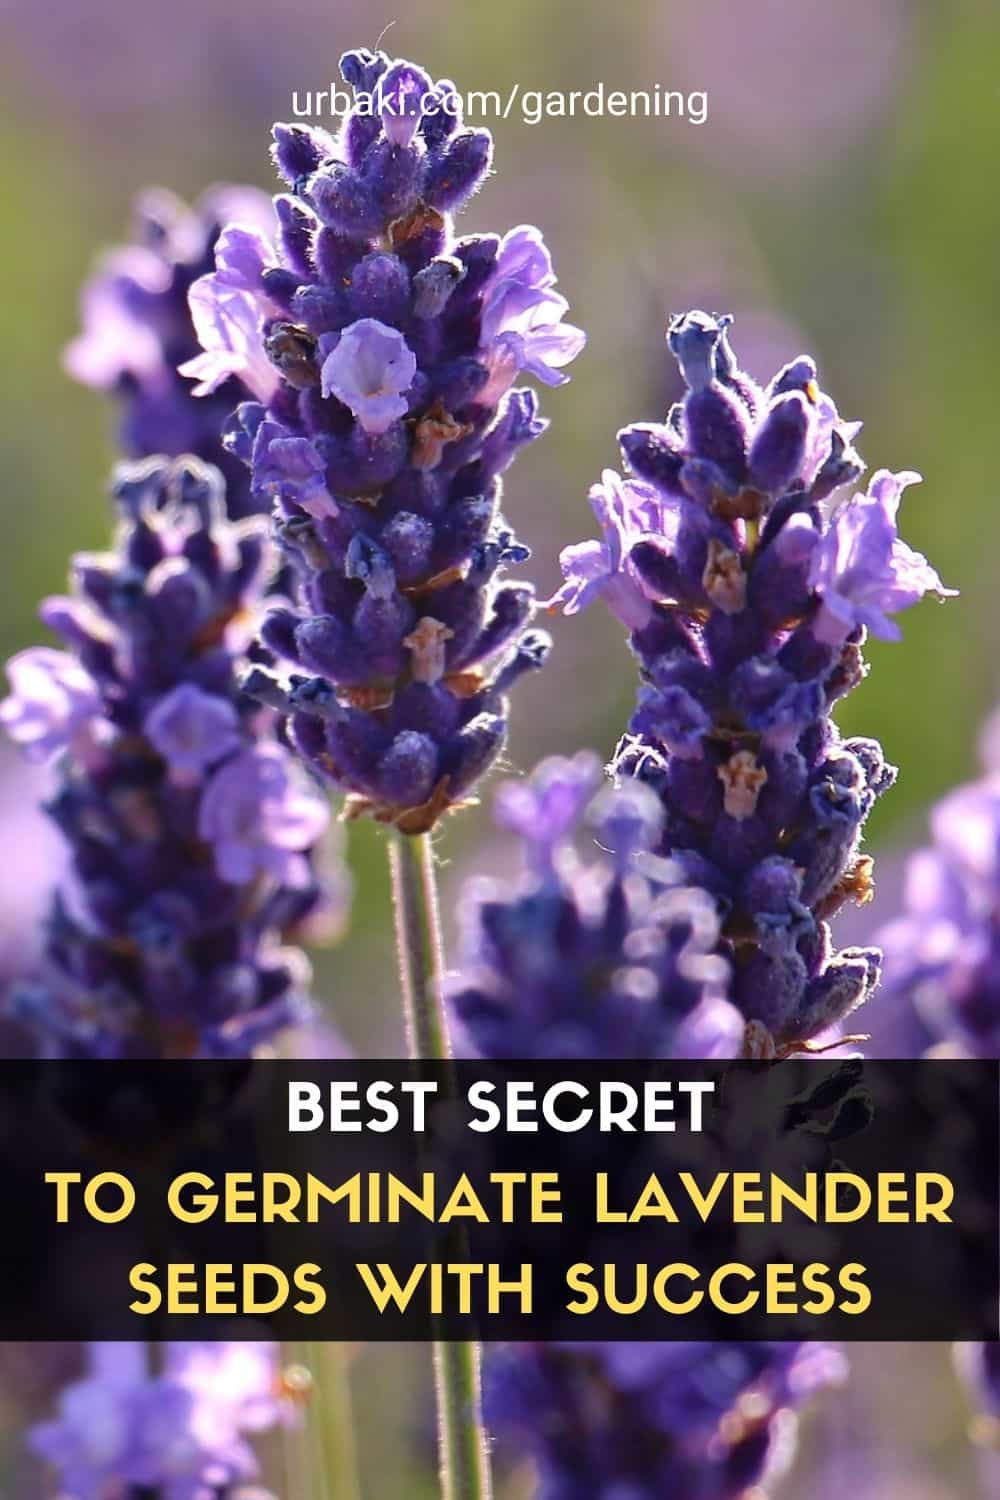 Germinate Lavender Seeds